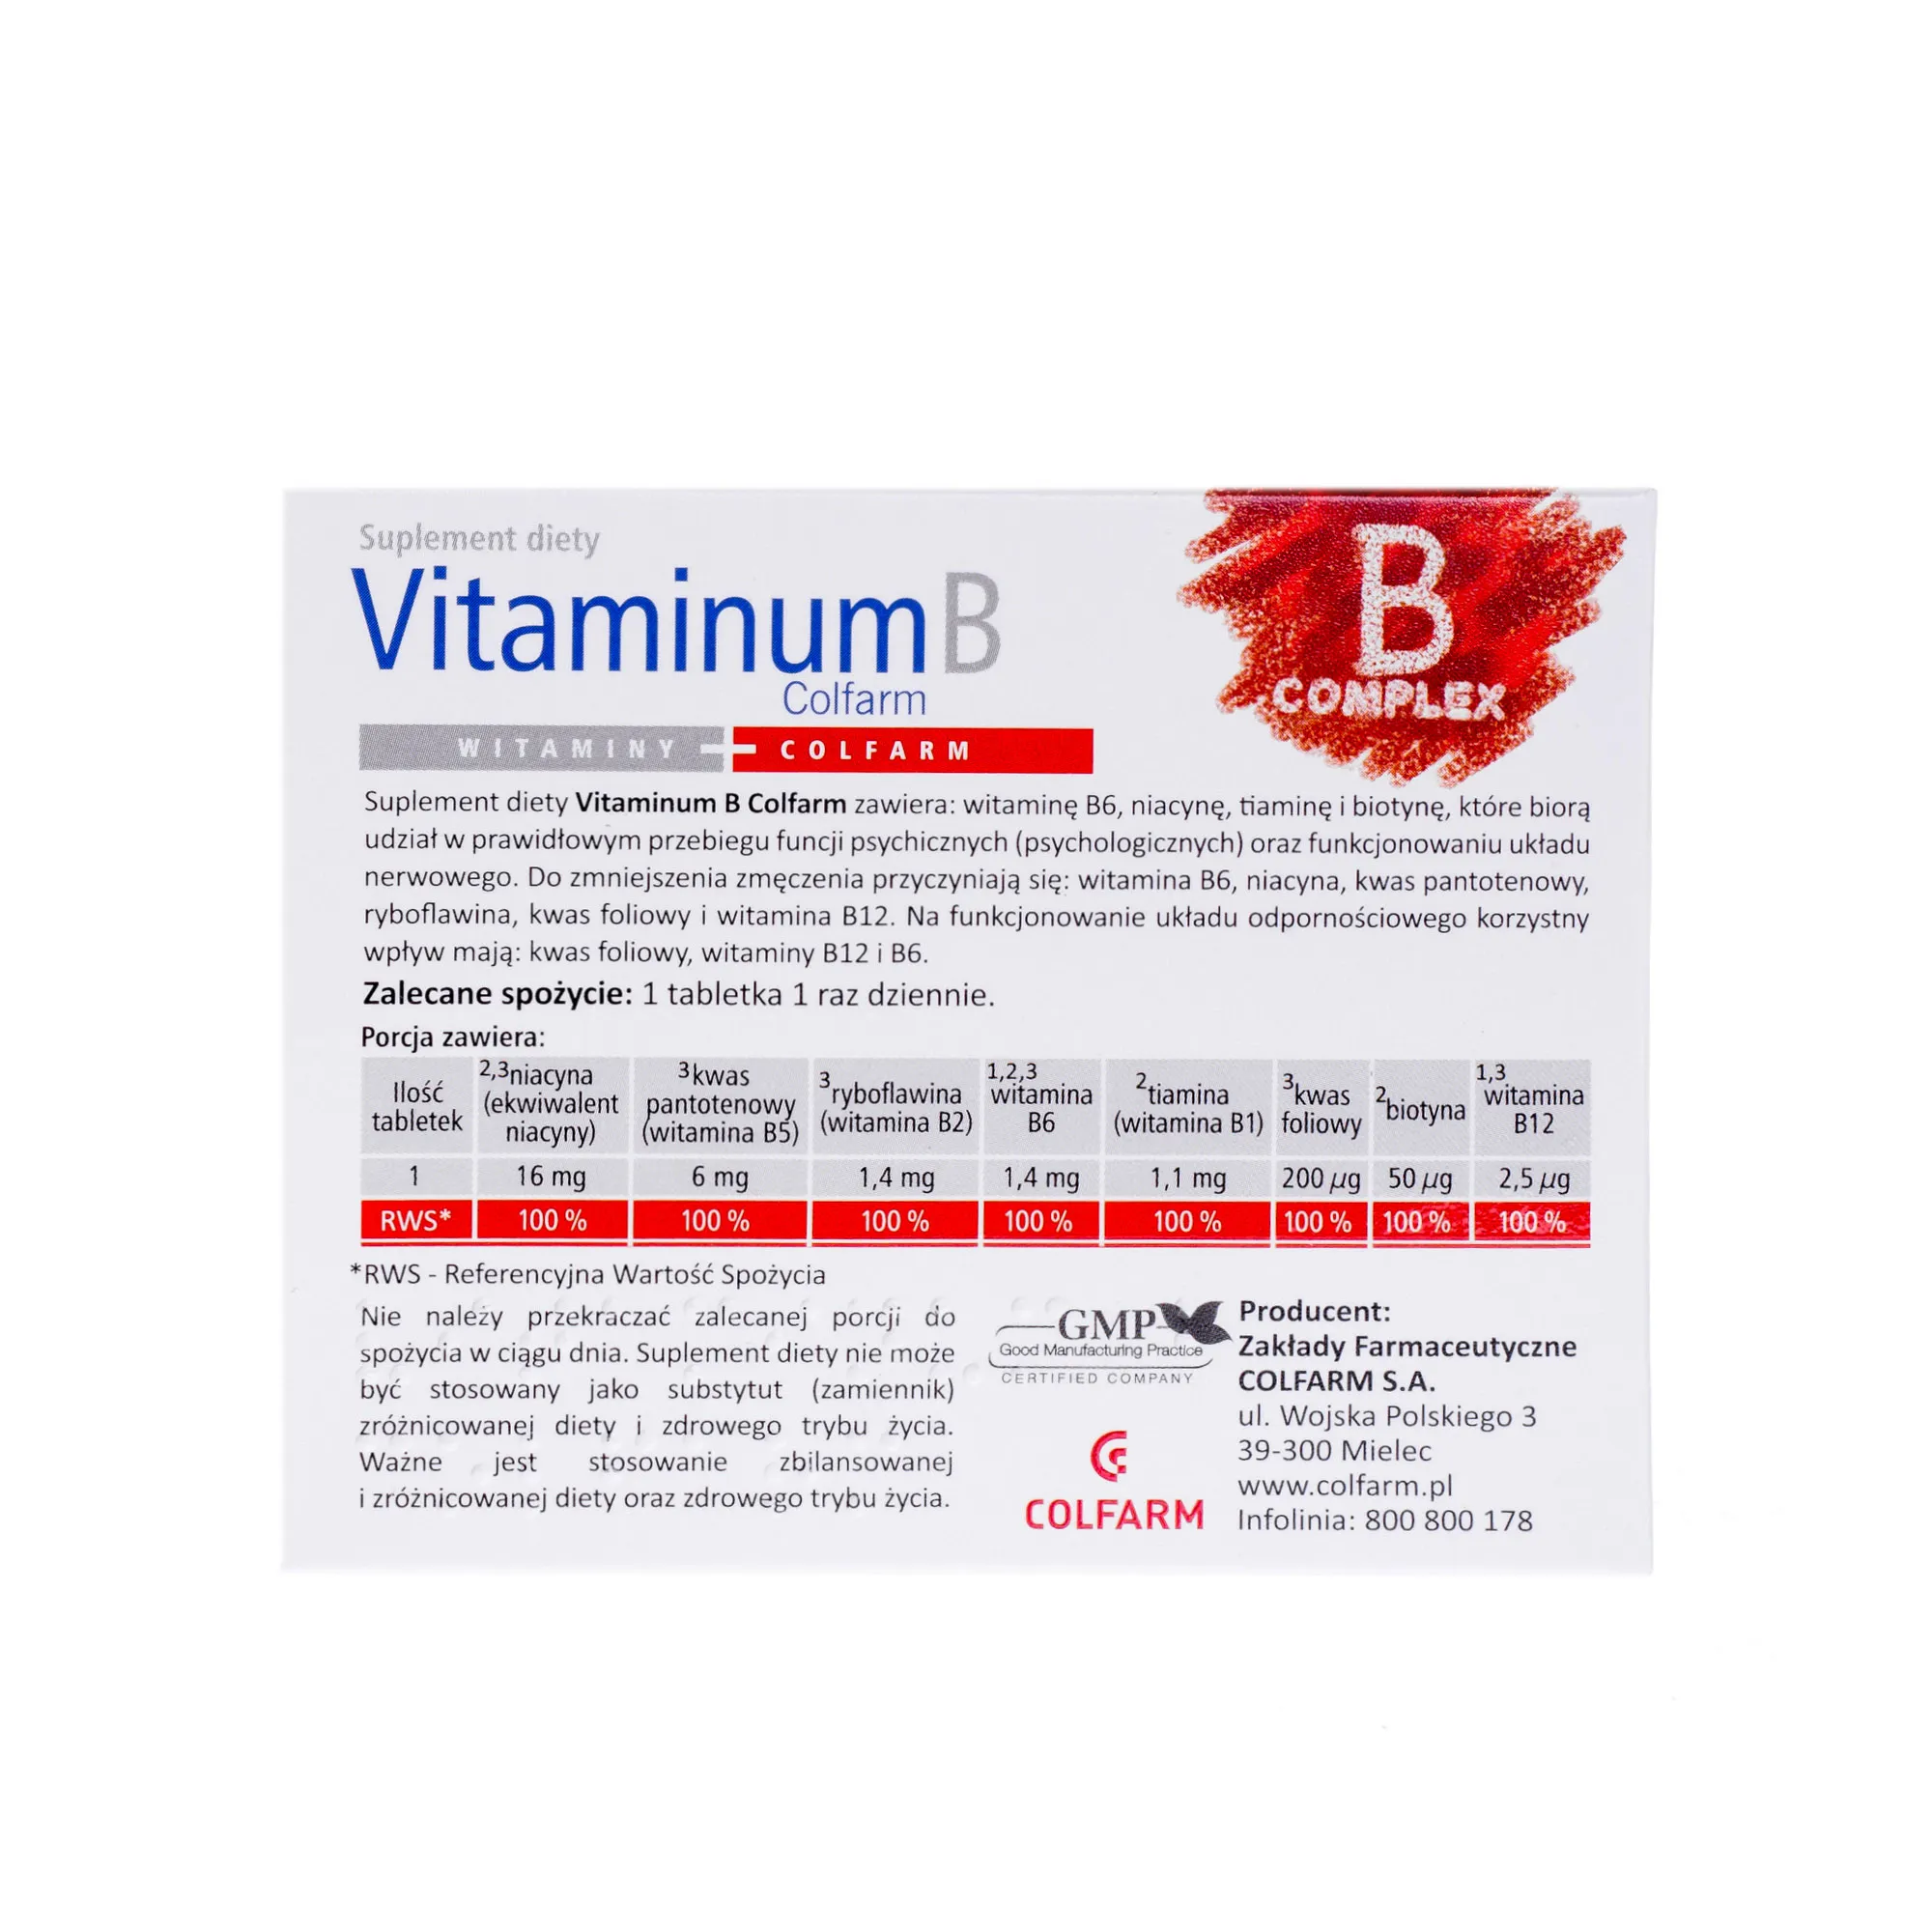 Vitaminum B, Colfarm, suplement diety, 50 + 10 tabletek 